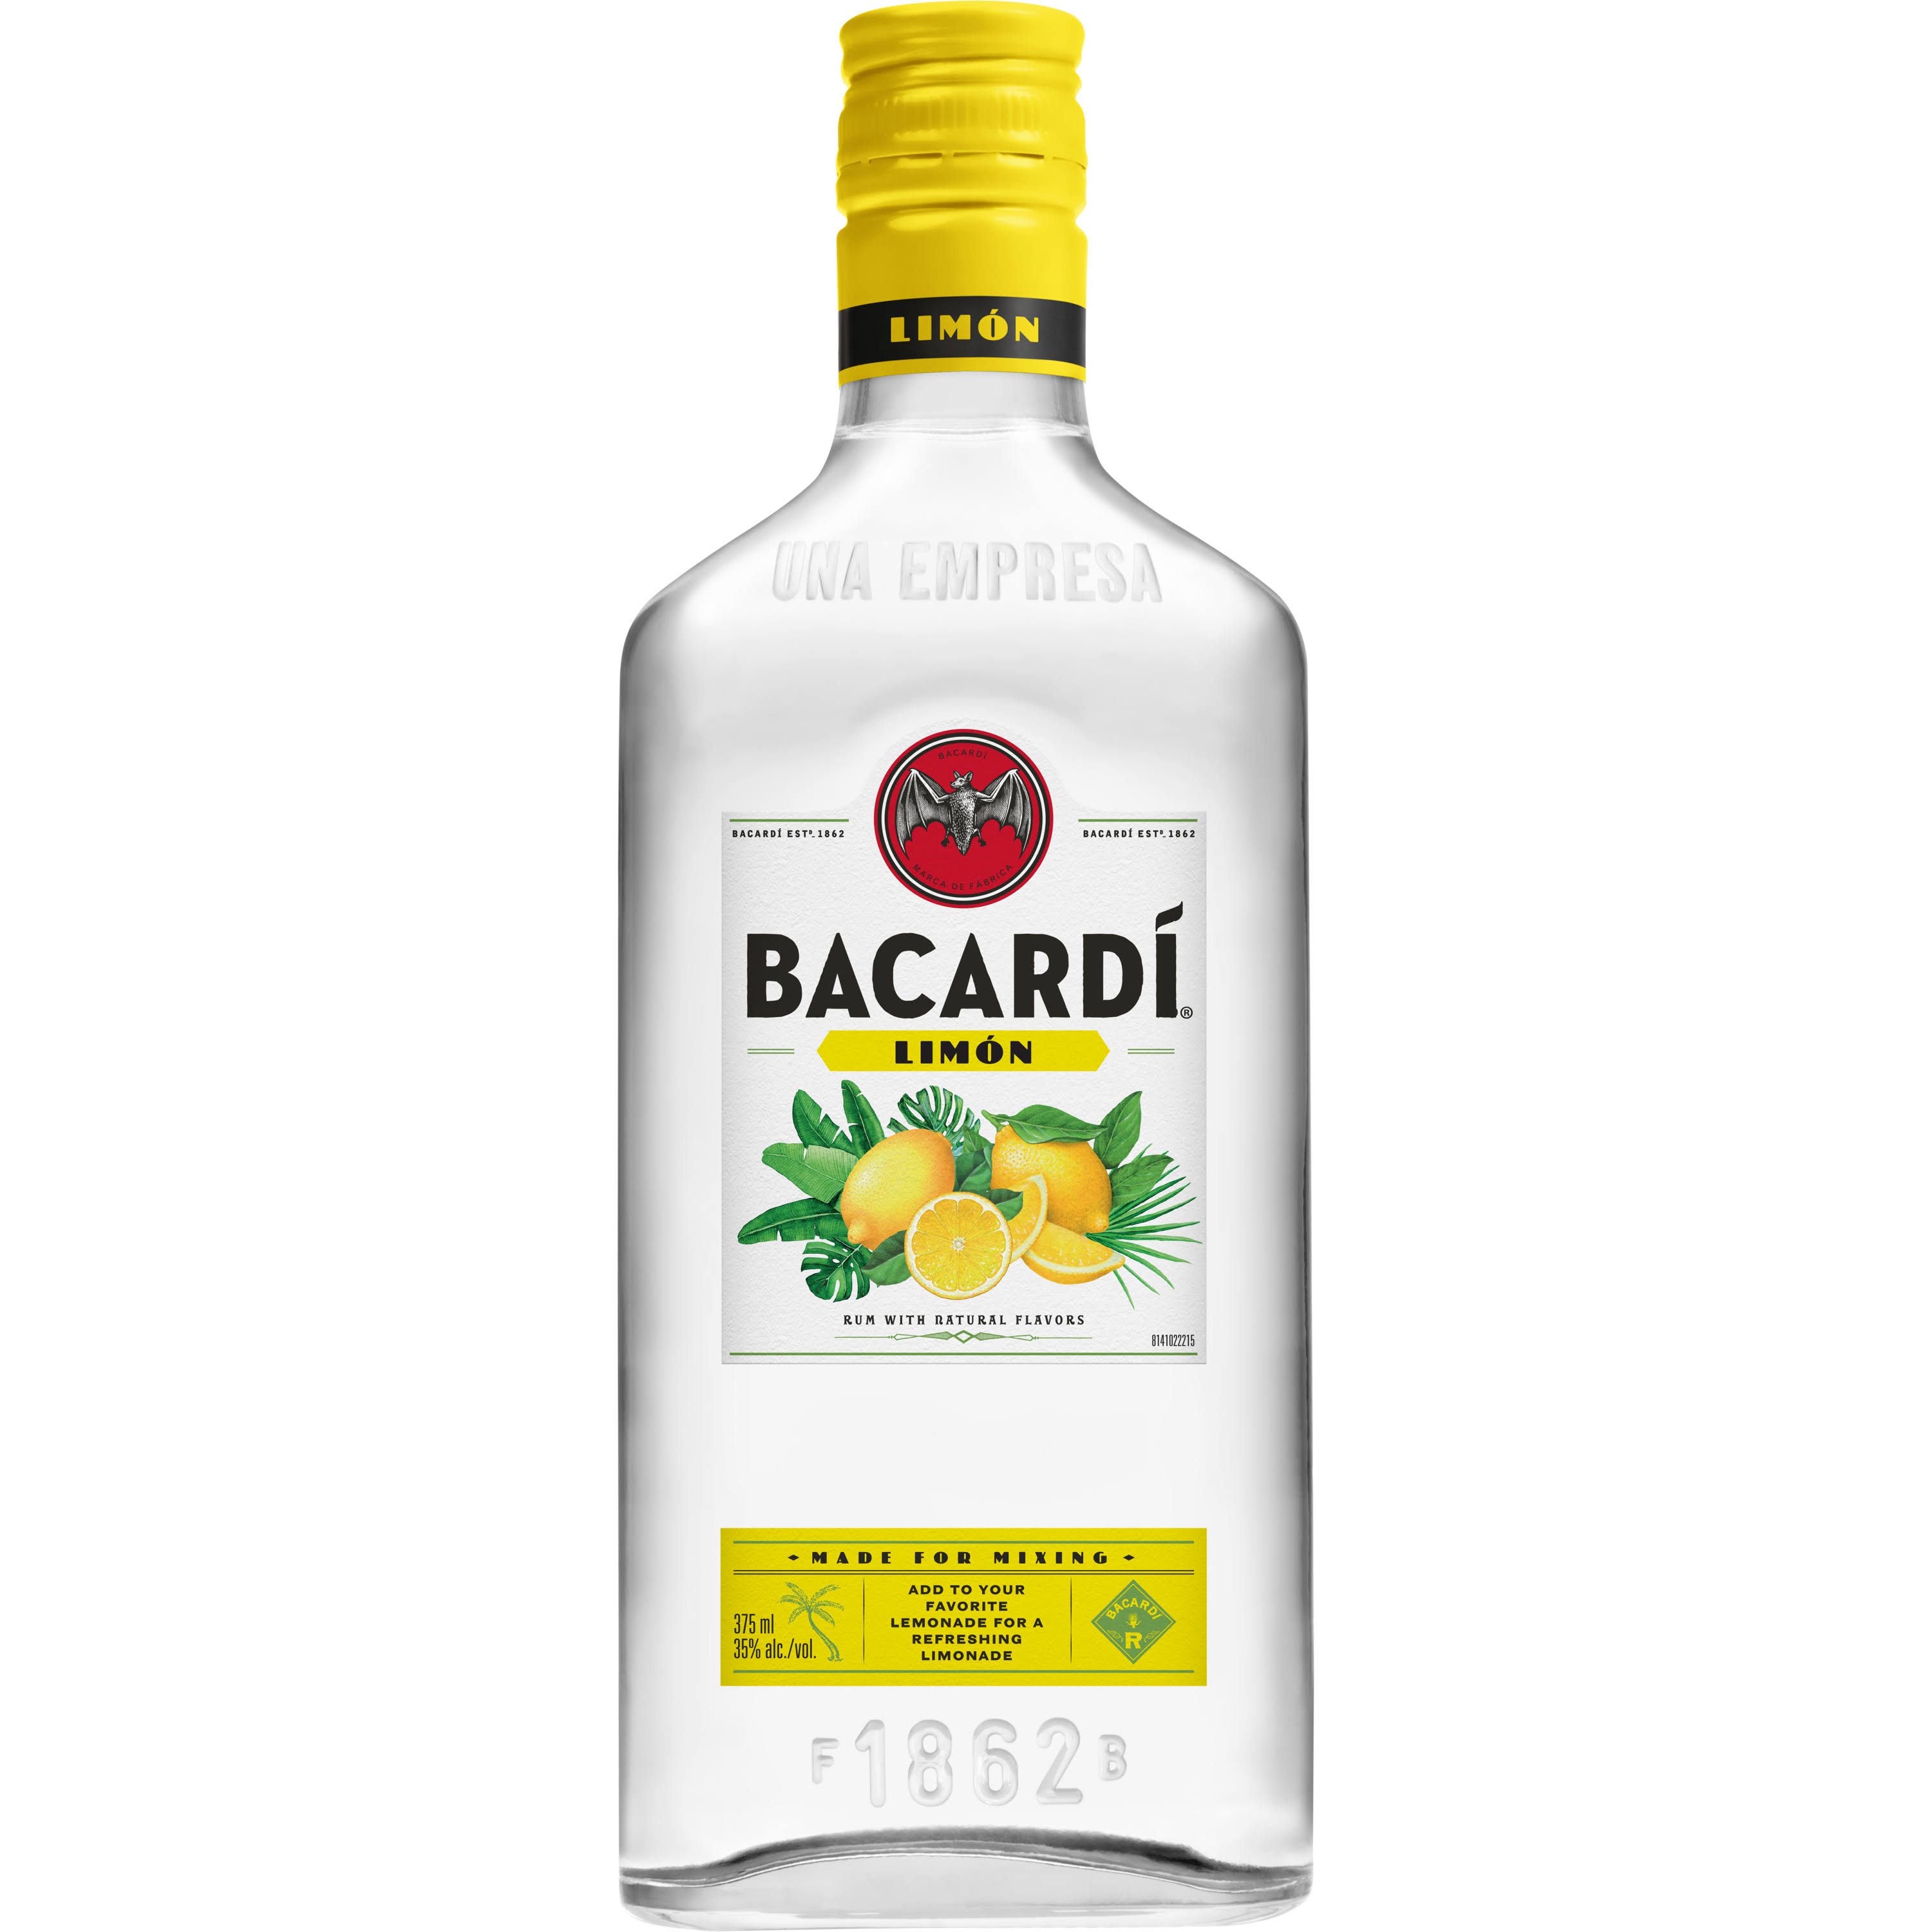 Bacardi Rum, Limon - 375 ml